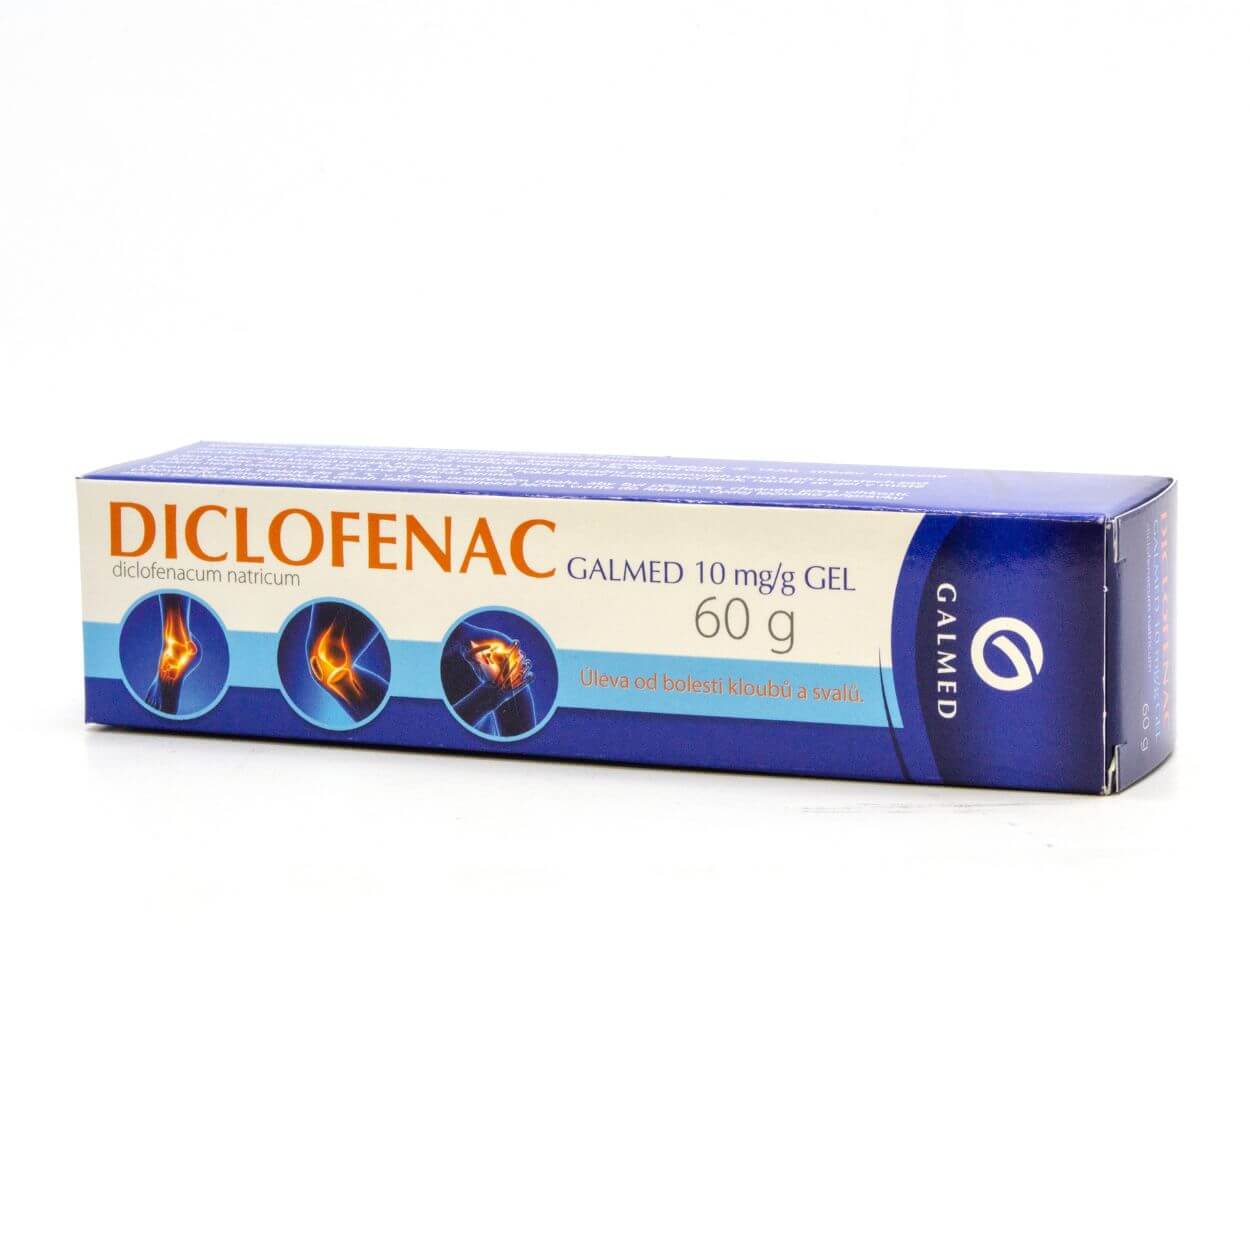 Diclofenac-Galmed-10mgg-gel-1x60g